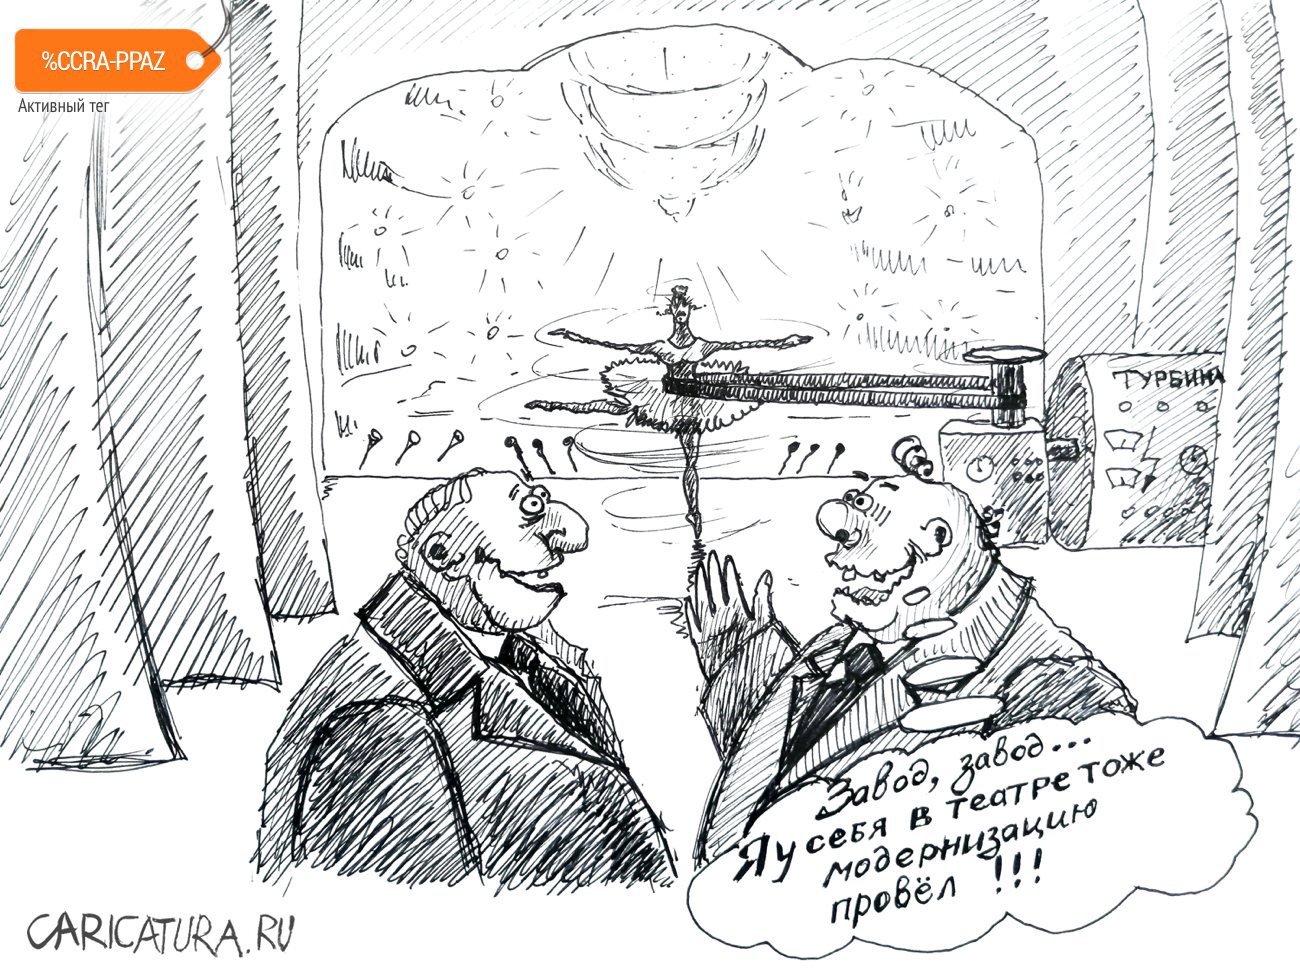 Карикатура "Арт-модернизация", Андрей Тихомиров